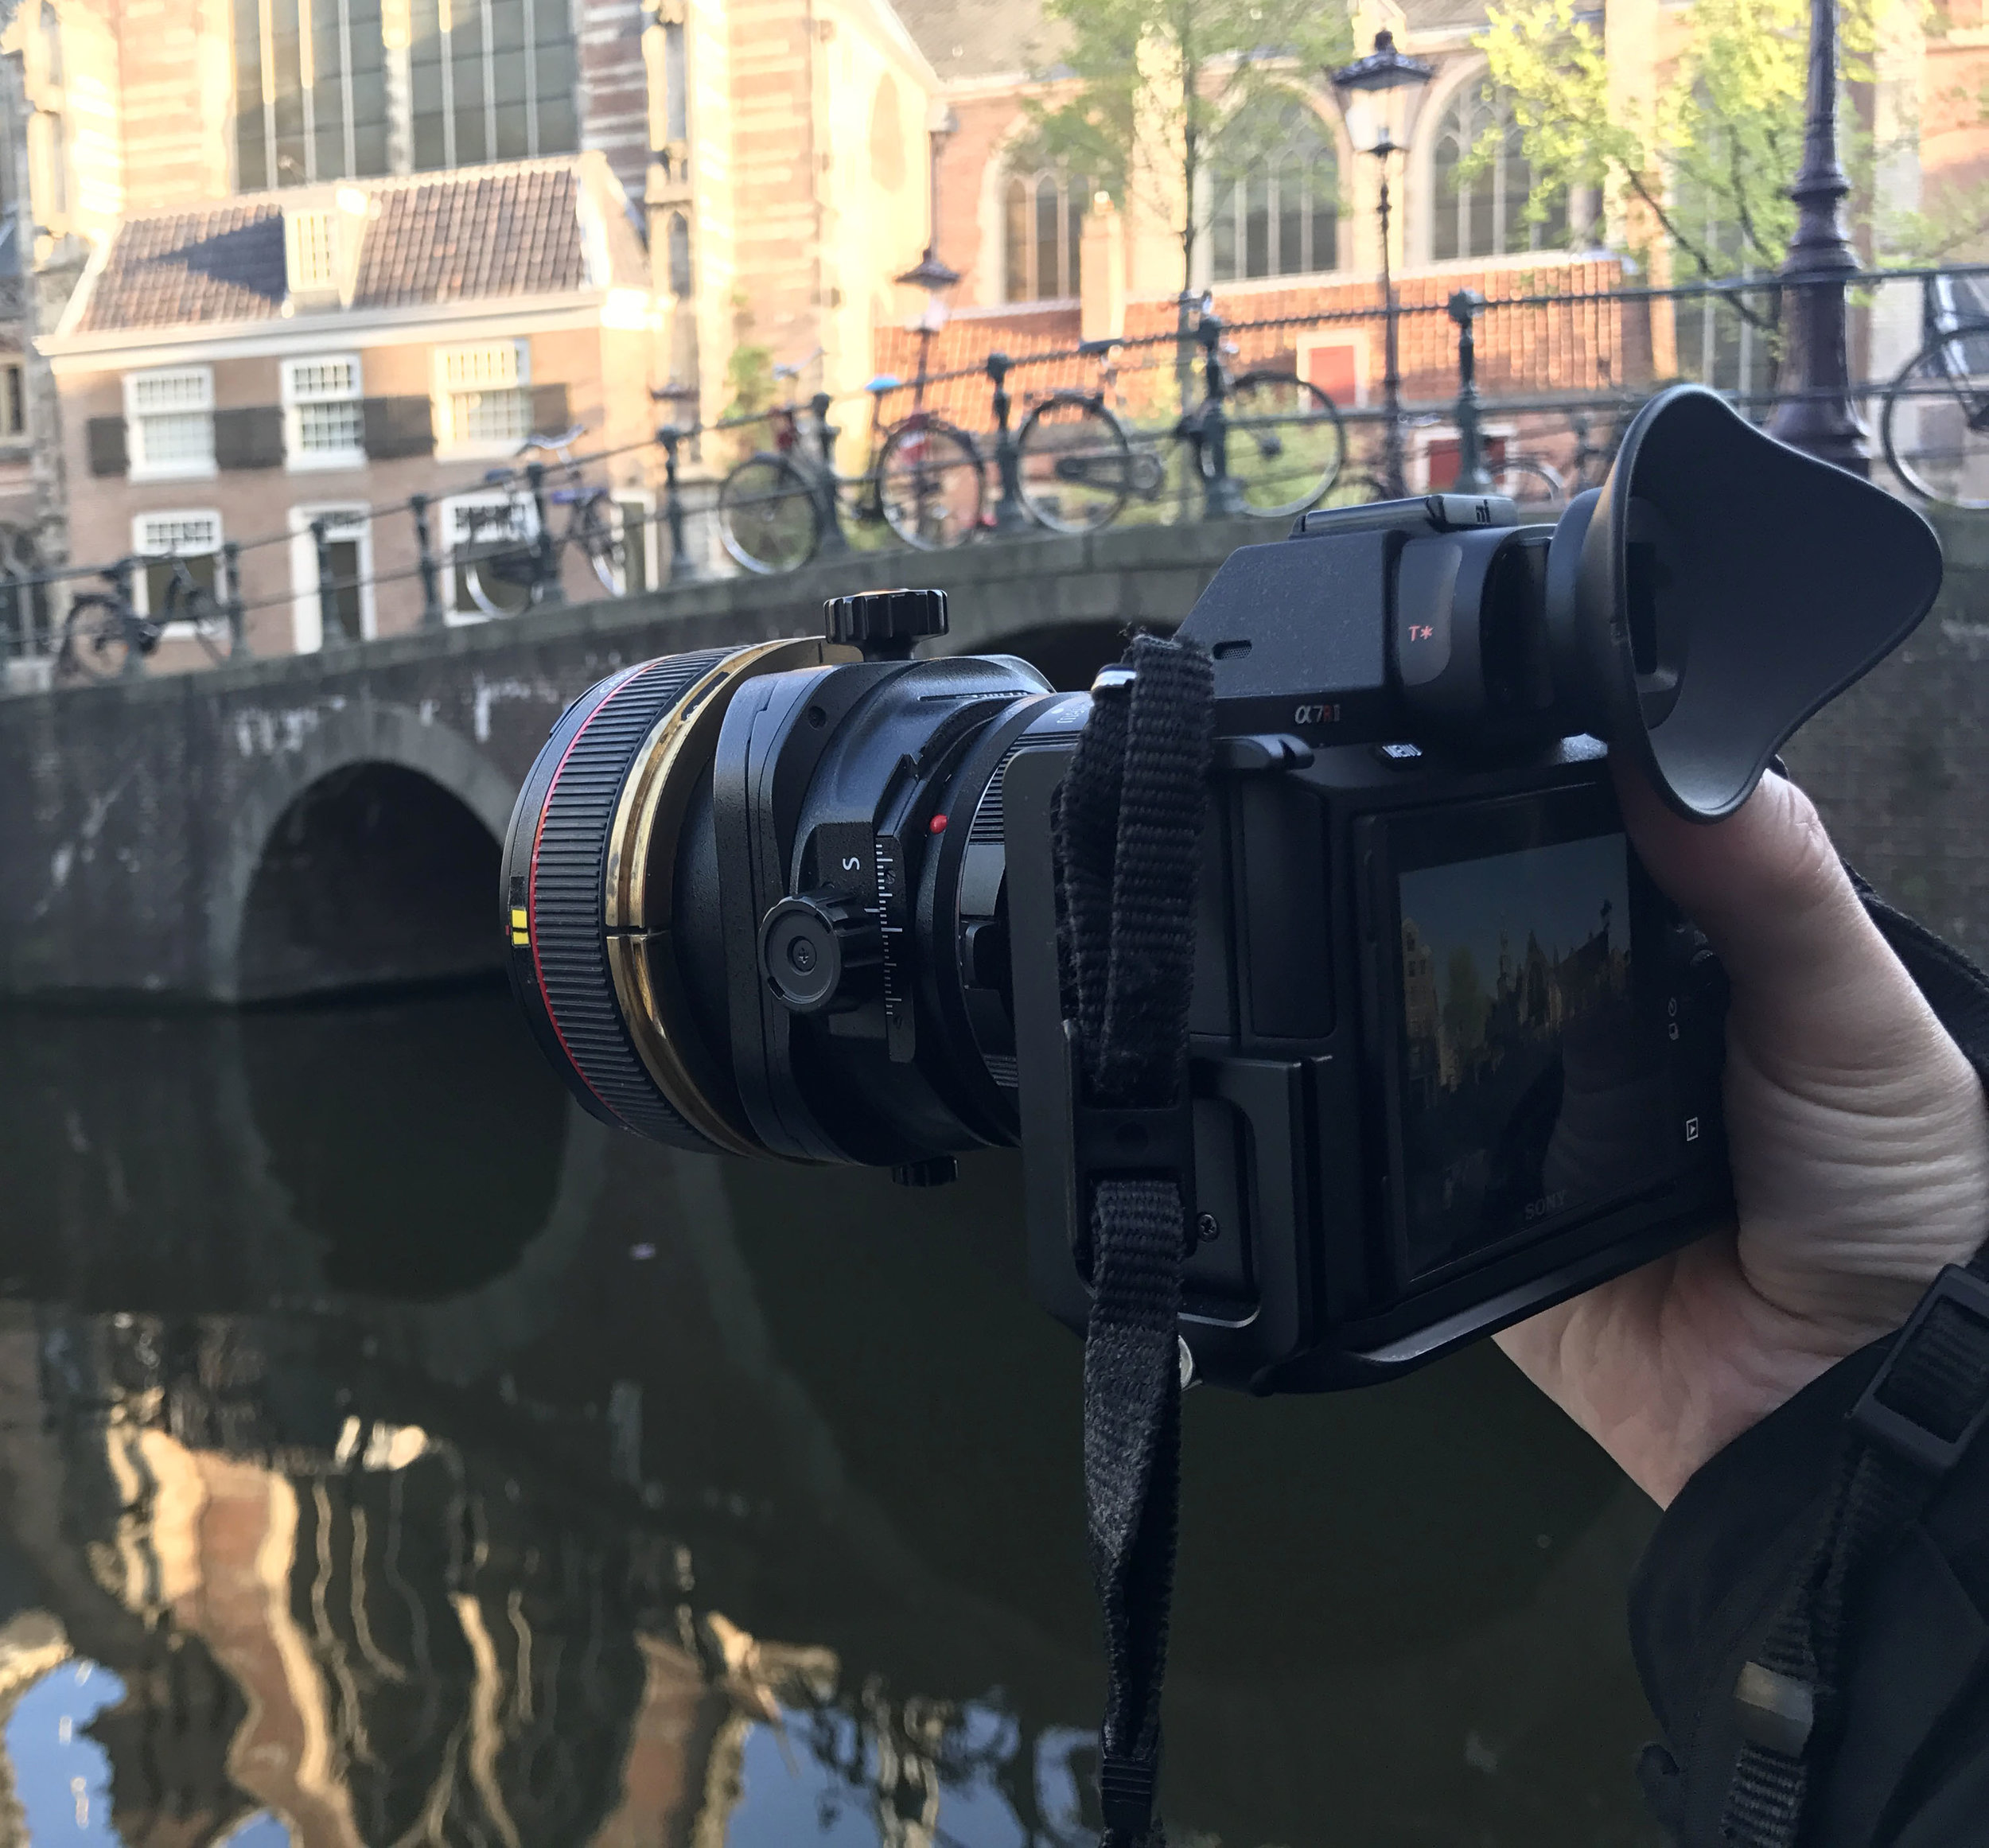 Onbepaald Meer Weekendtas Using tilt-shift lenses on Sony A7R2 cameras in Amsterdam, Netherlands |  Nicolas Cornet